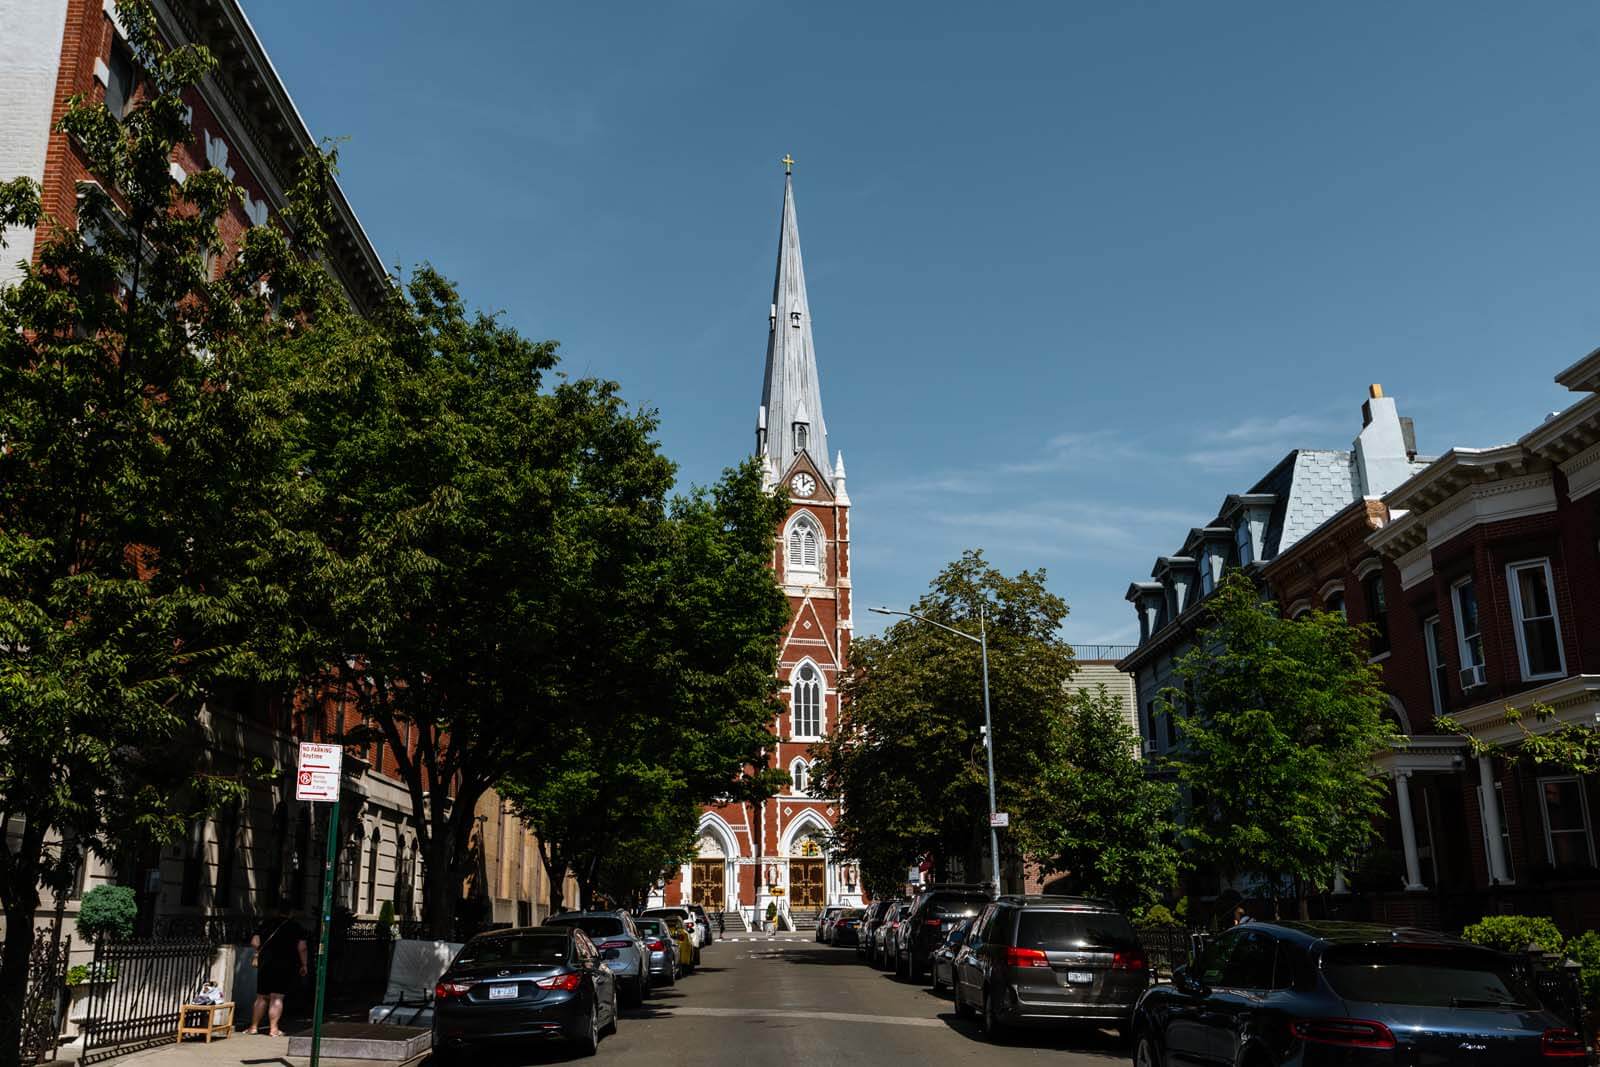 St. Anthony of Padua – St. Alphonsus Parish church in Greenpoint Brooklyn